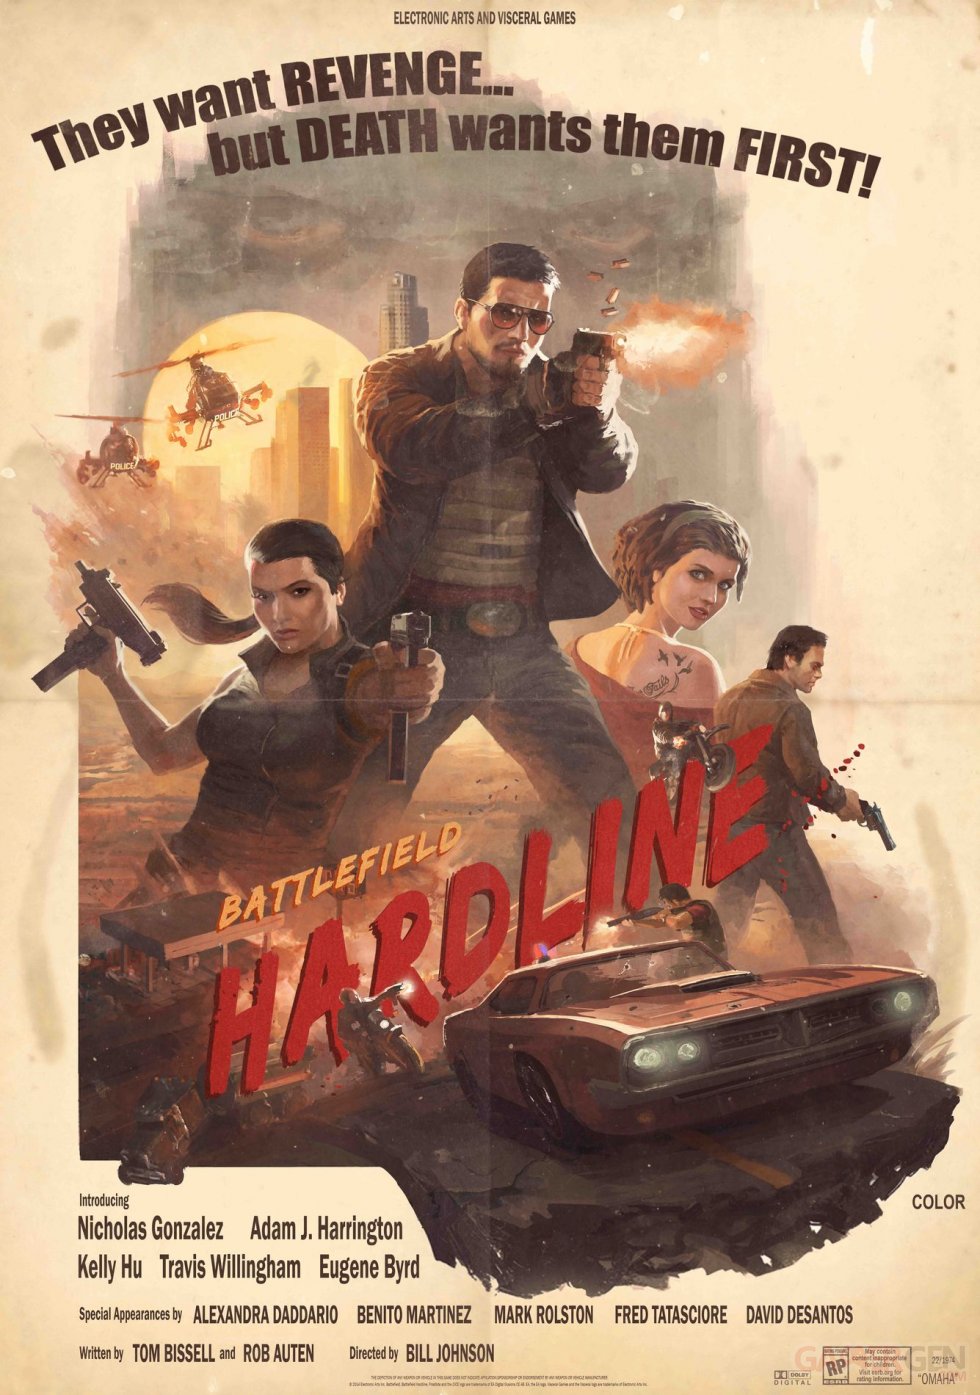 Battlefield-Hardline_15-04-2015_movie-poster-art-3